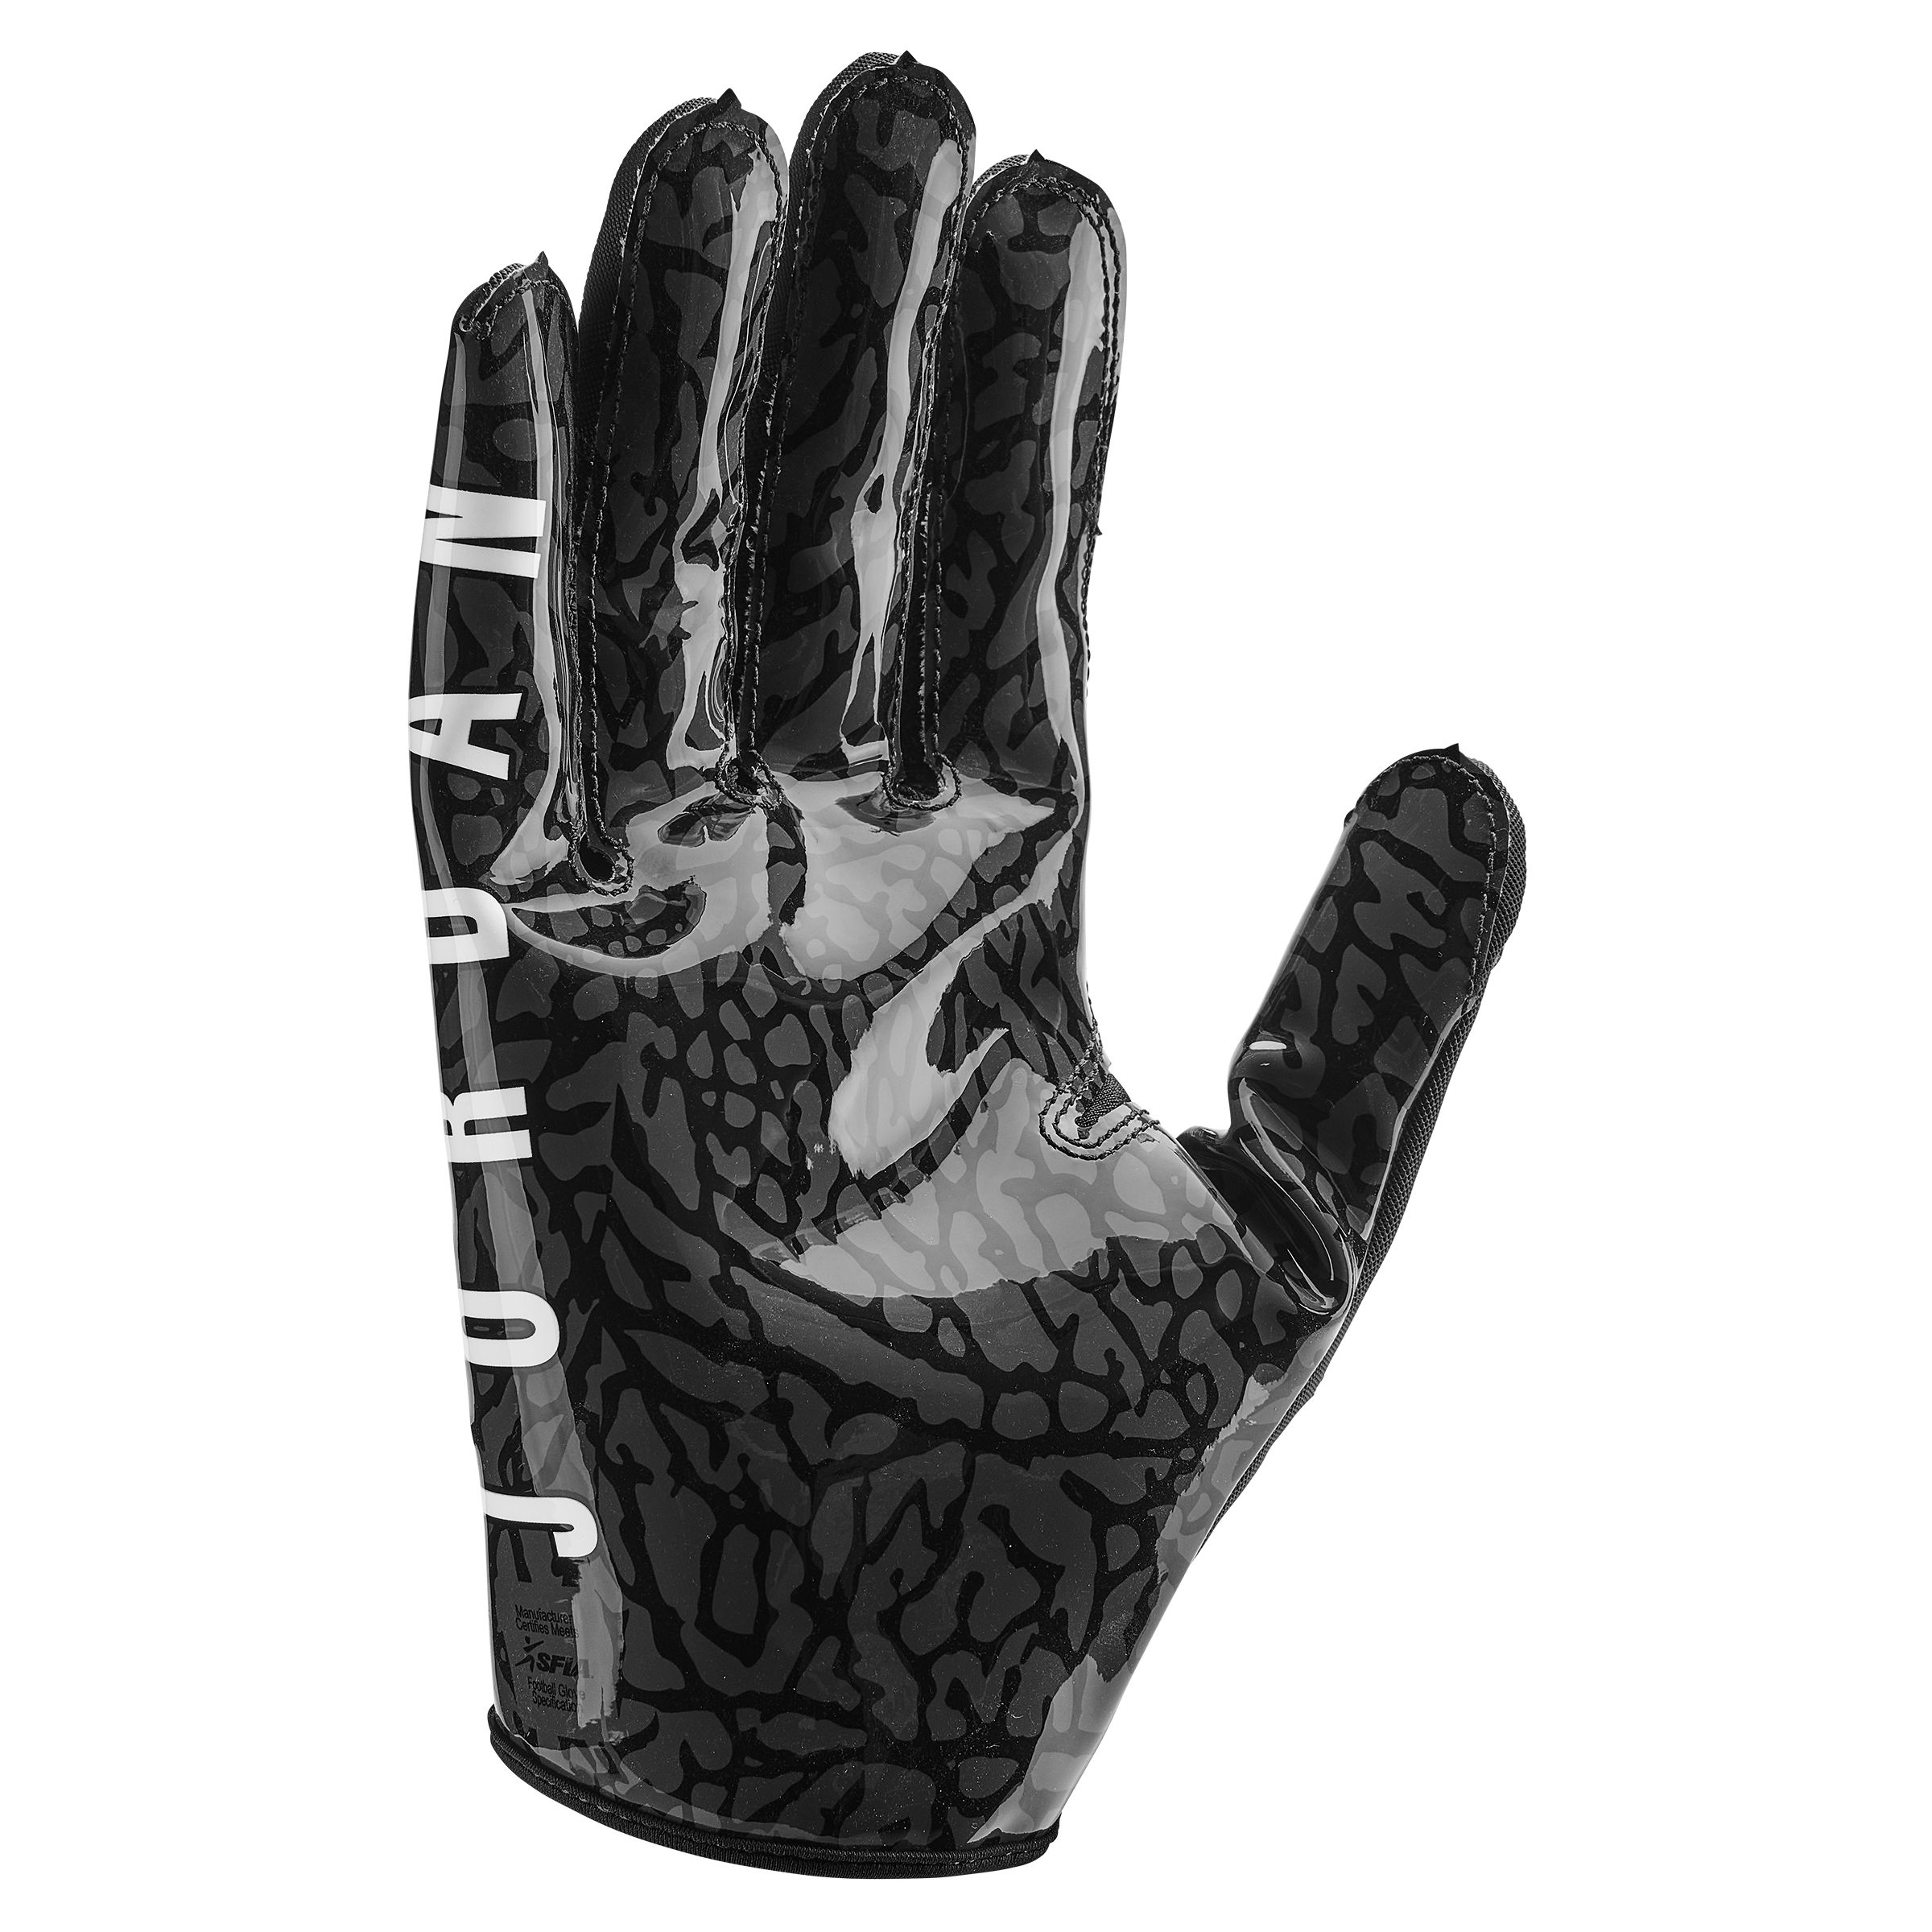 Image of Jordan Jet 7.0 Football Gloves